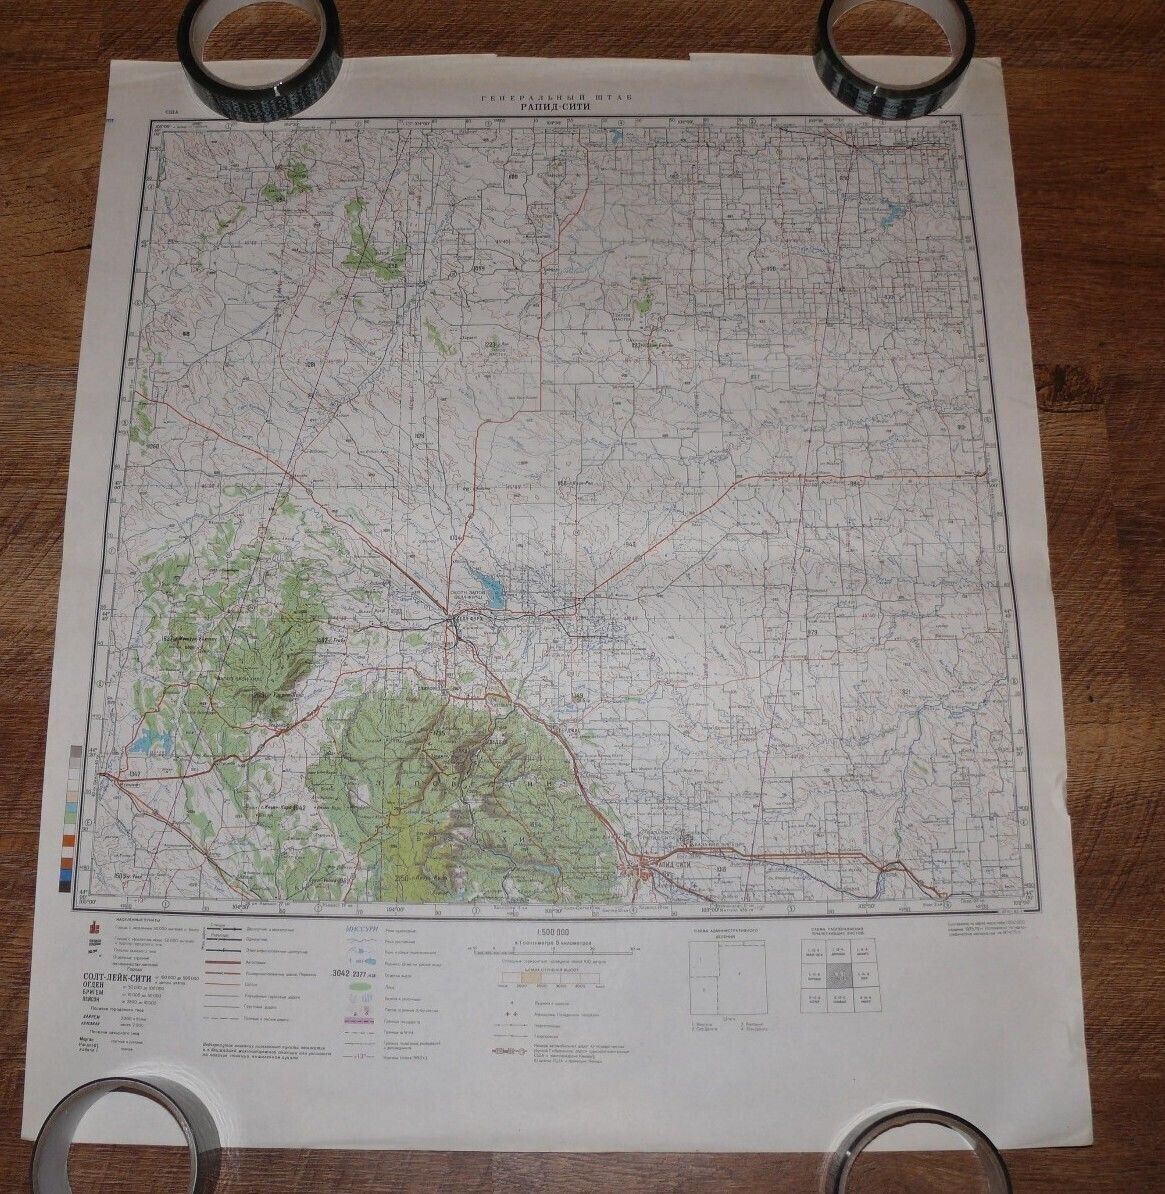 Authentic Soviet Cold War SECRET Military Map Rapid City, South Dakota USA